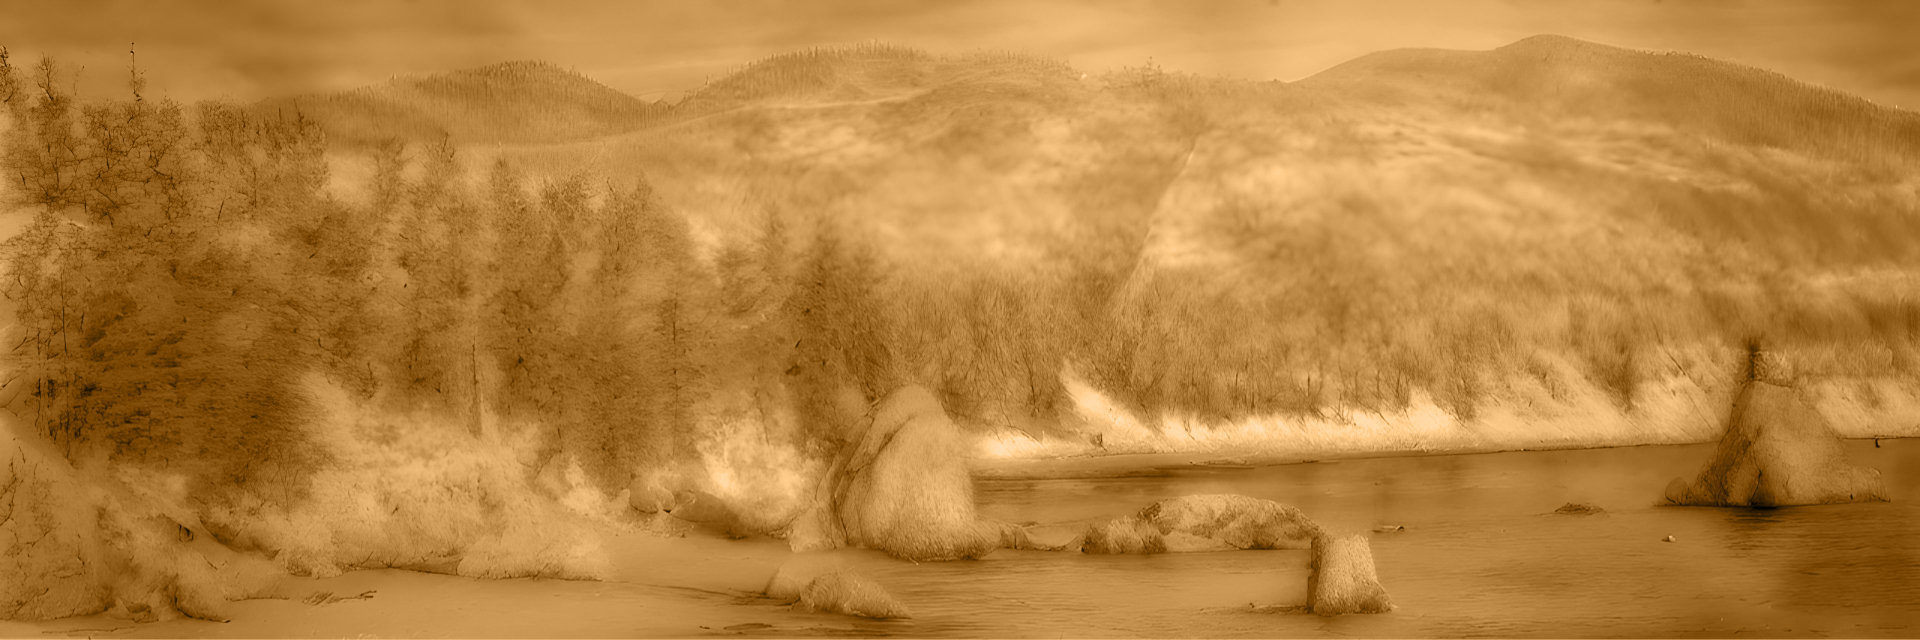 Watercolor image resembling Humbug Mountain State Park.